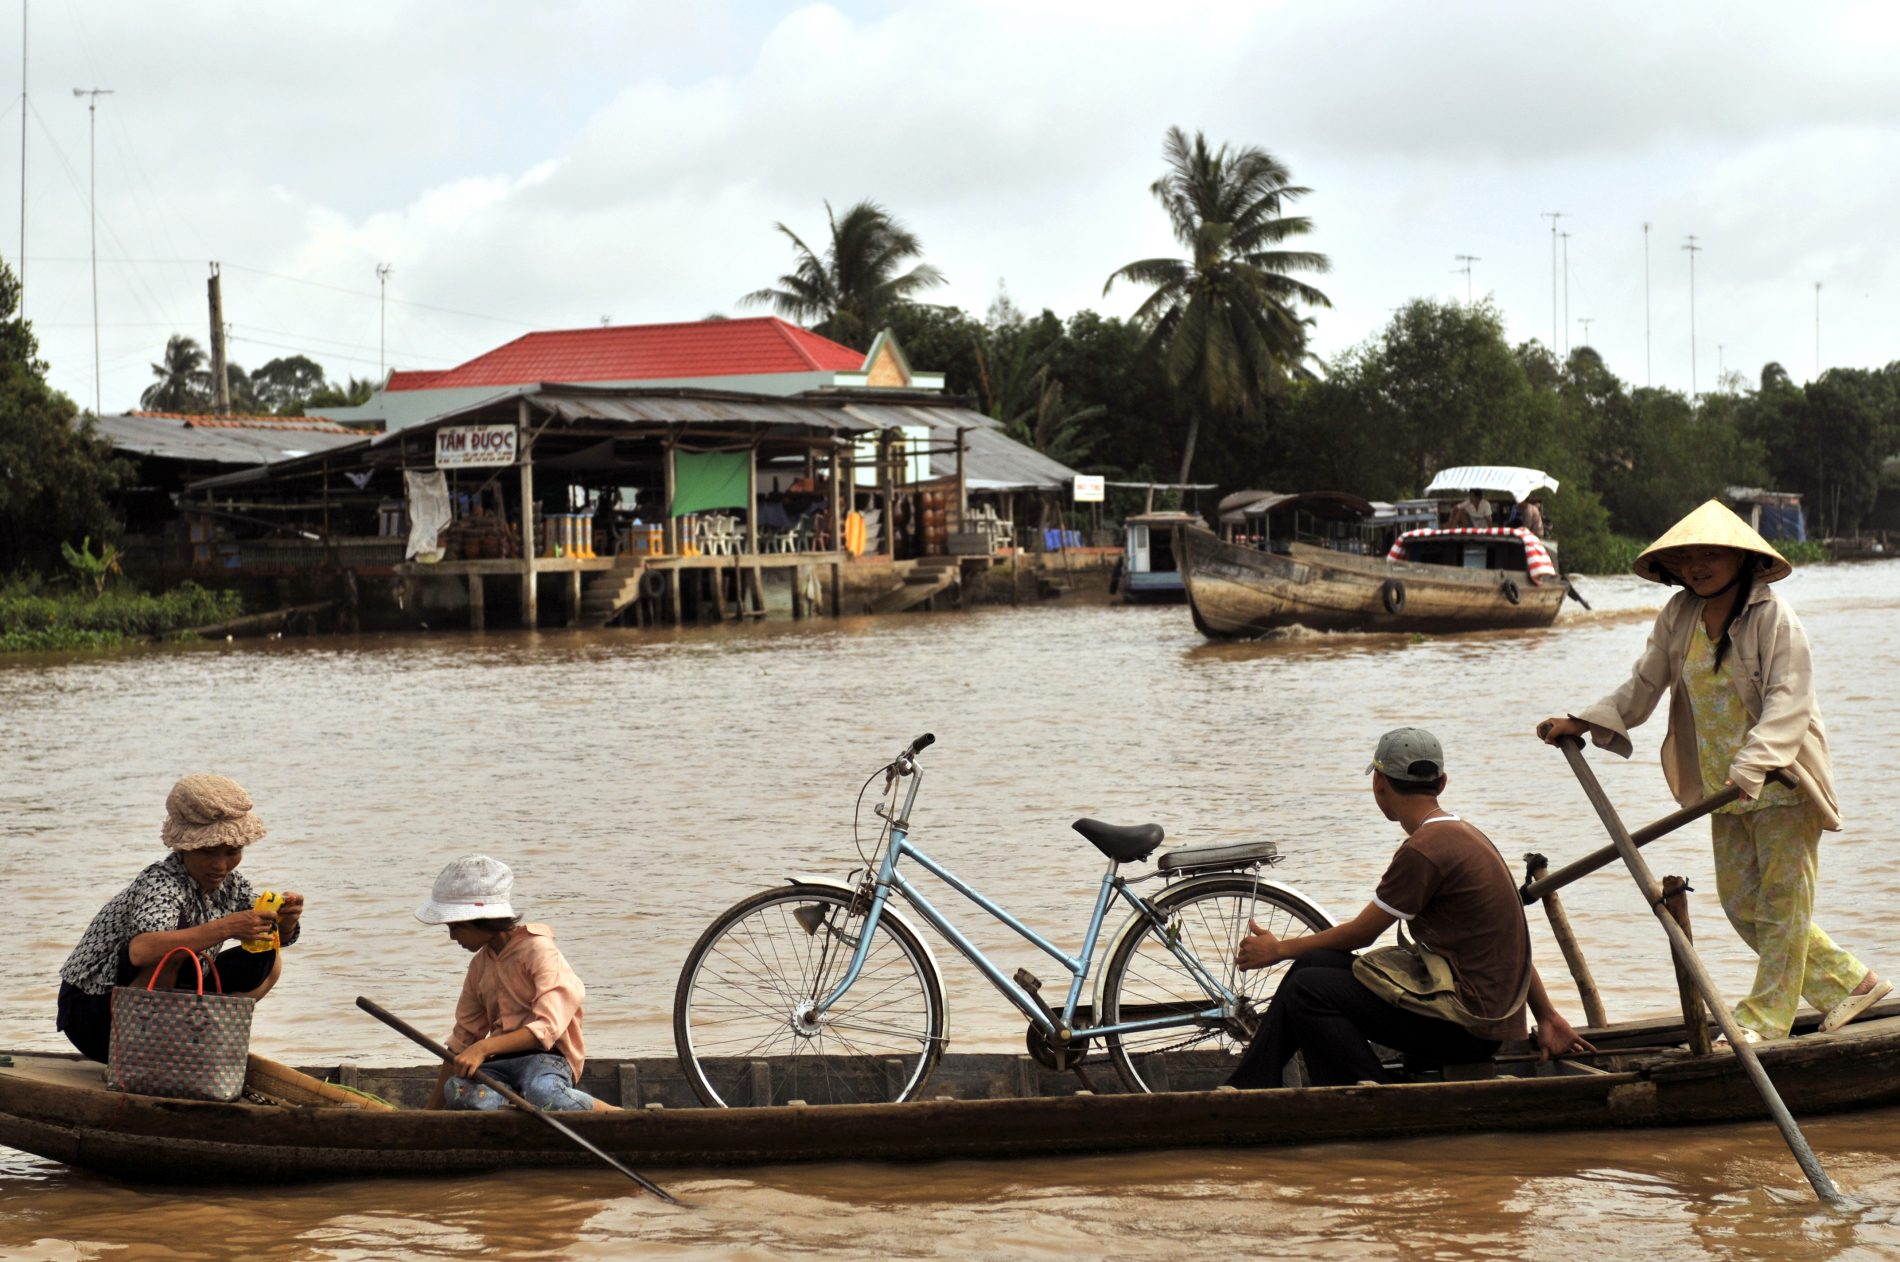 Cruise på Mekong floden i Cambodia går sin vante gang uden stress